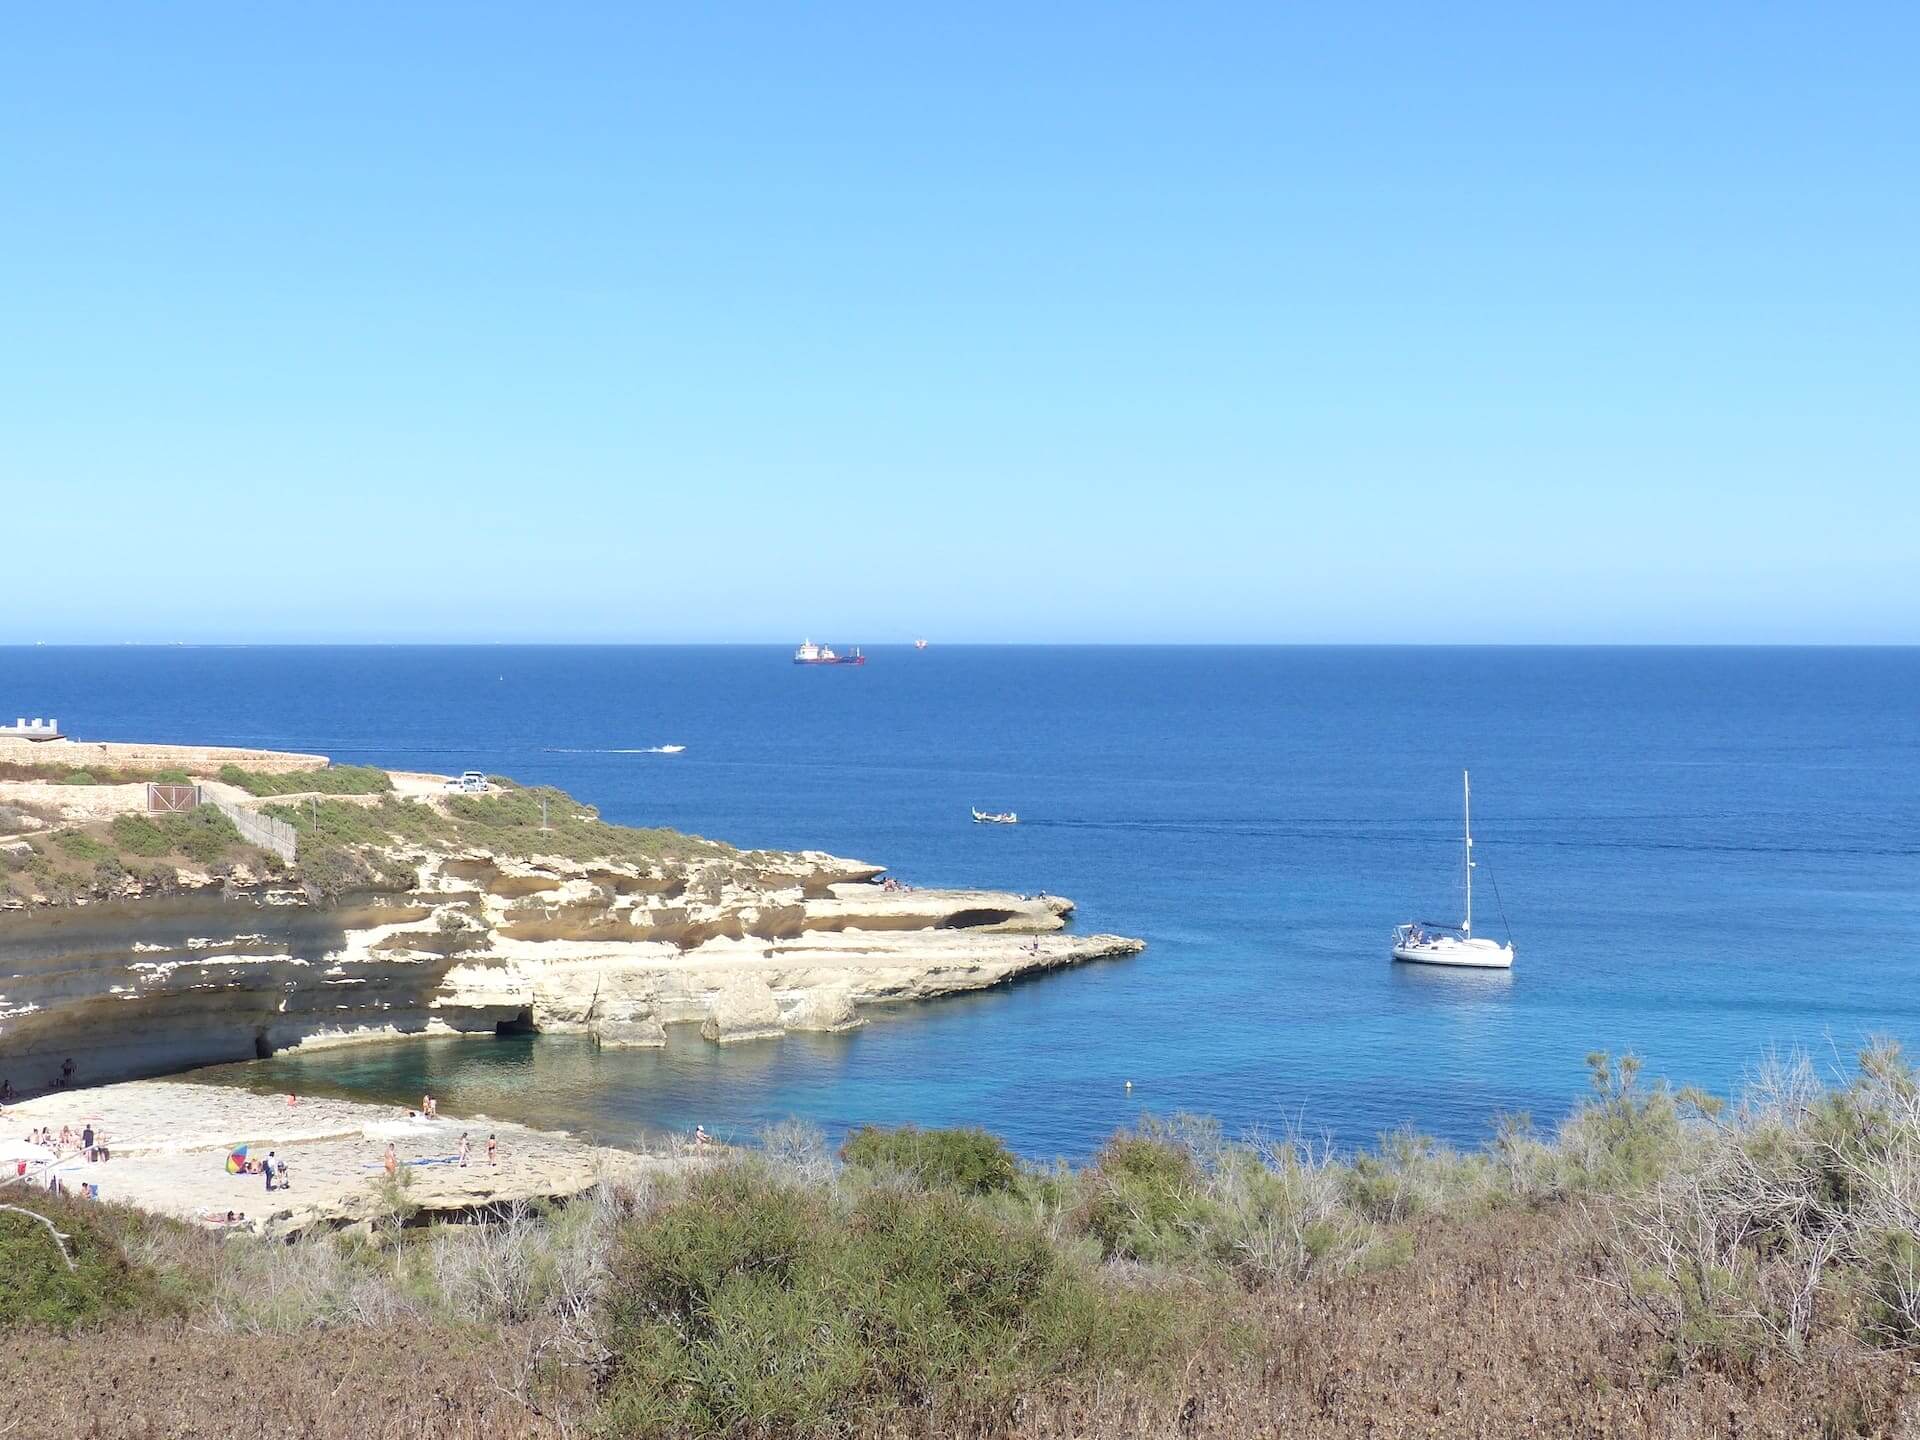 Vacances à Malte, baignade dans la Crique de Kalanka